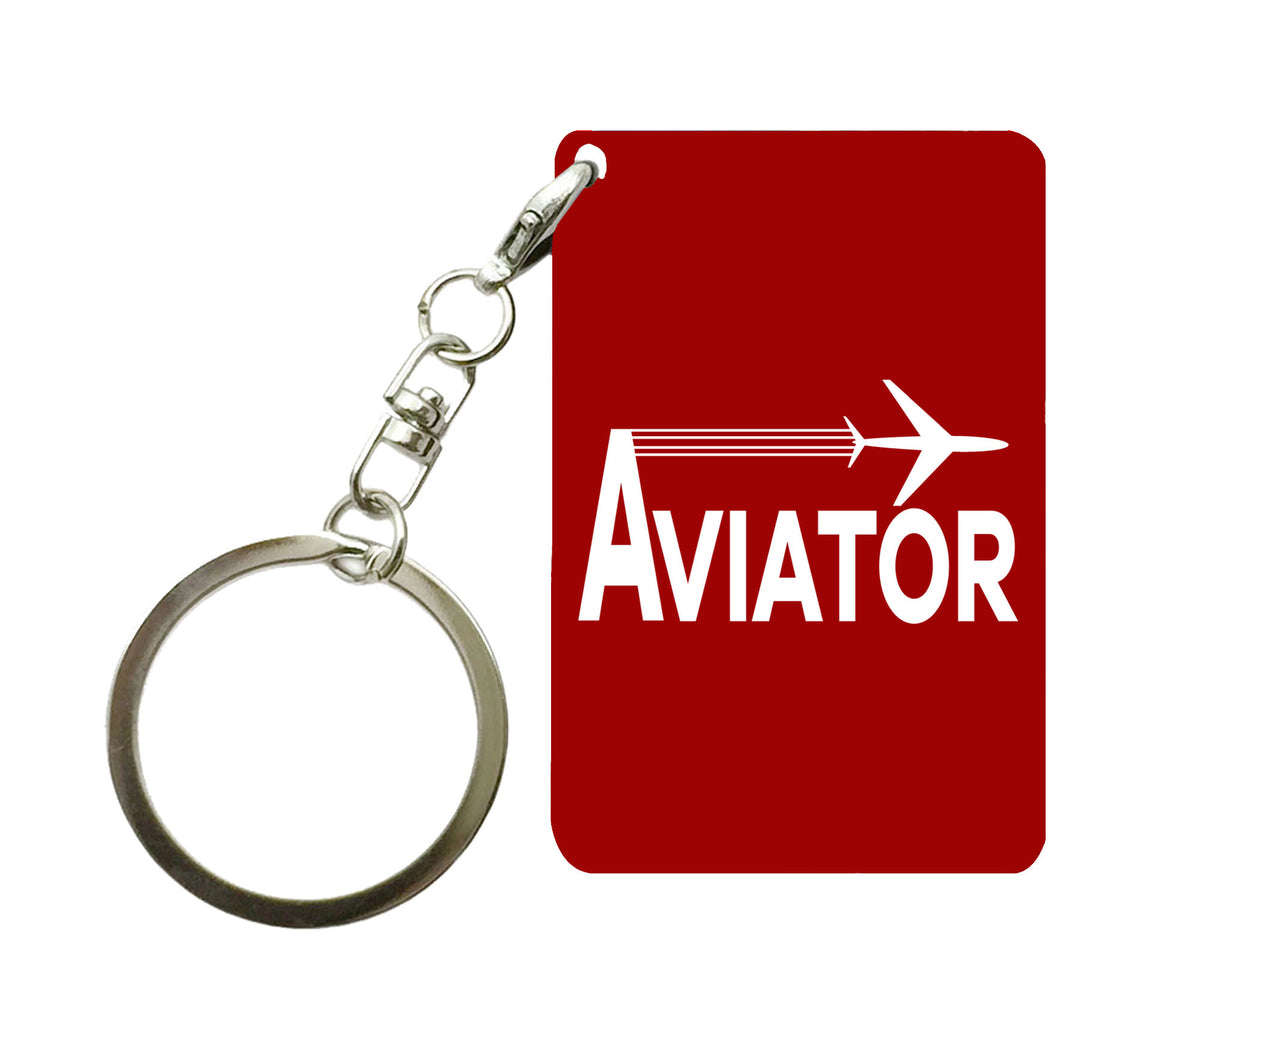 Aviator Designed Key Chains